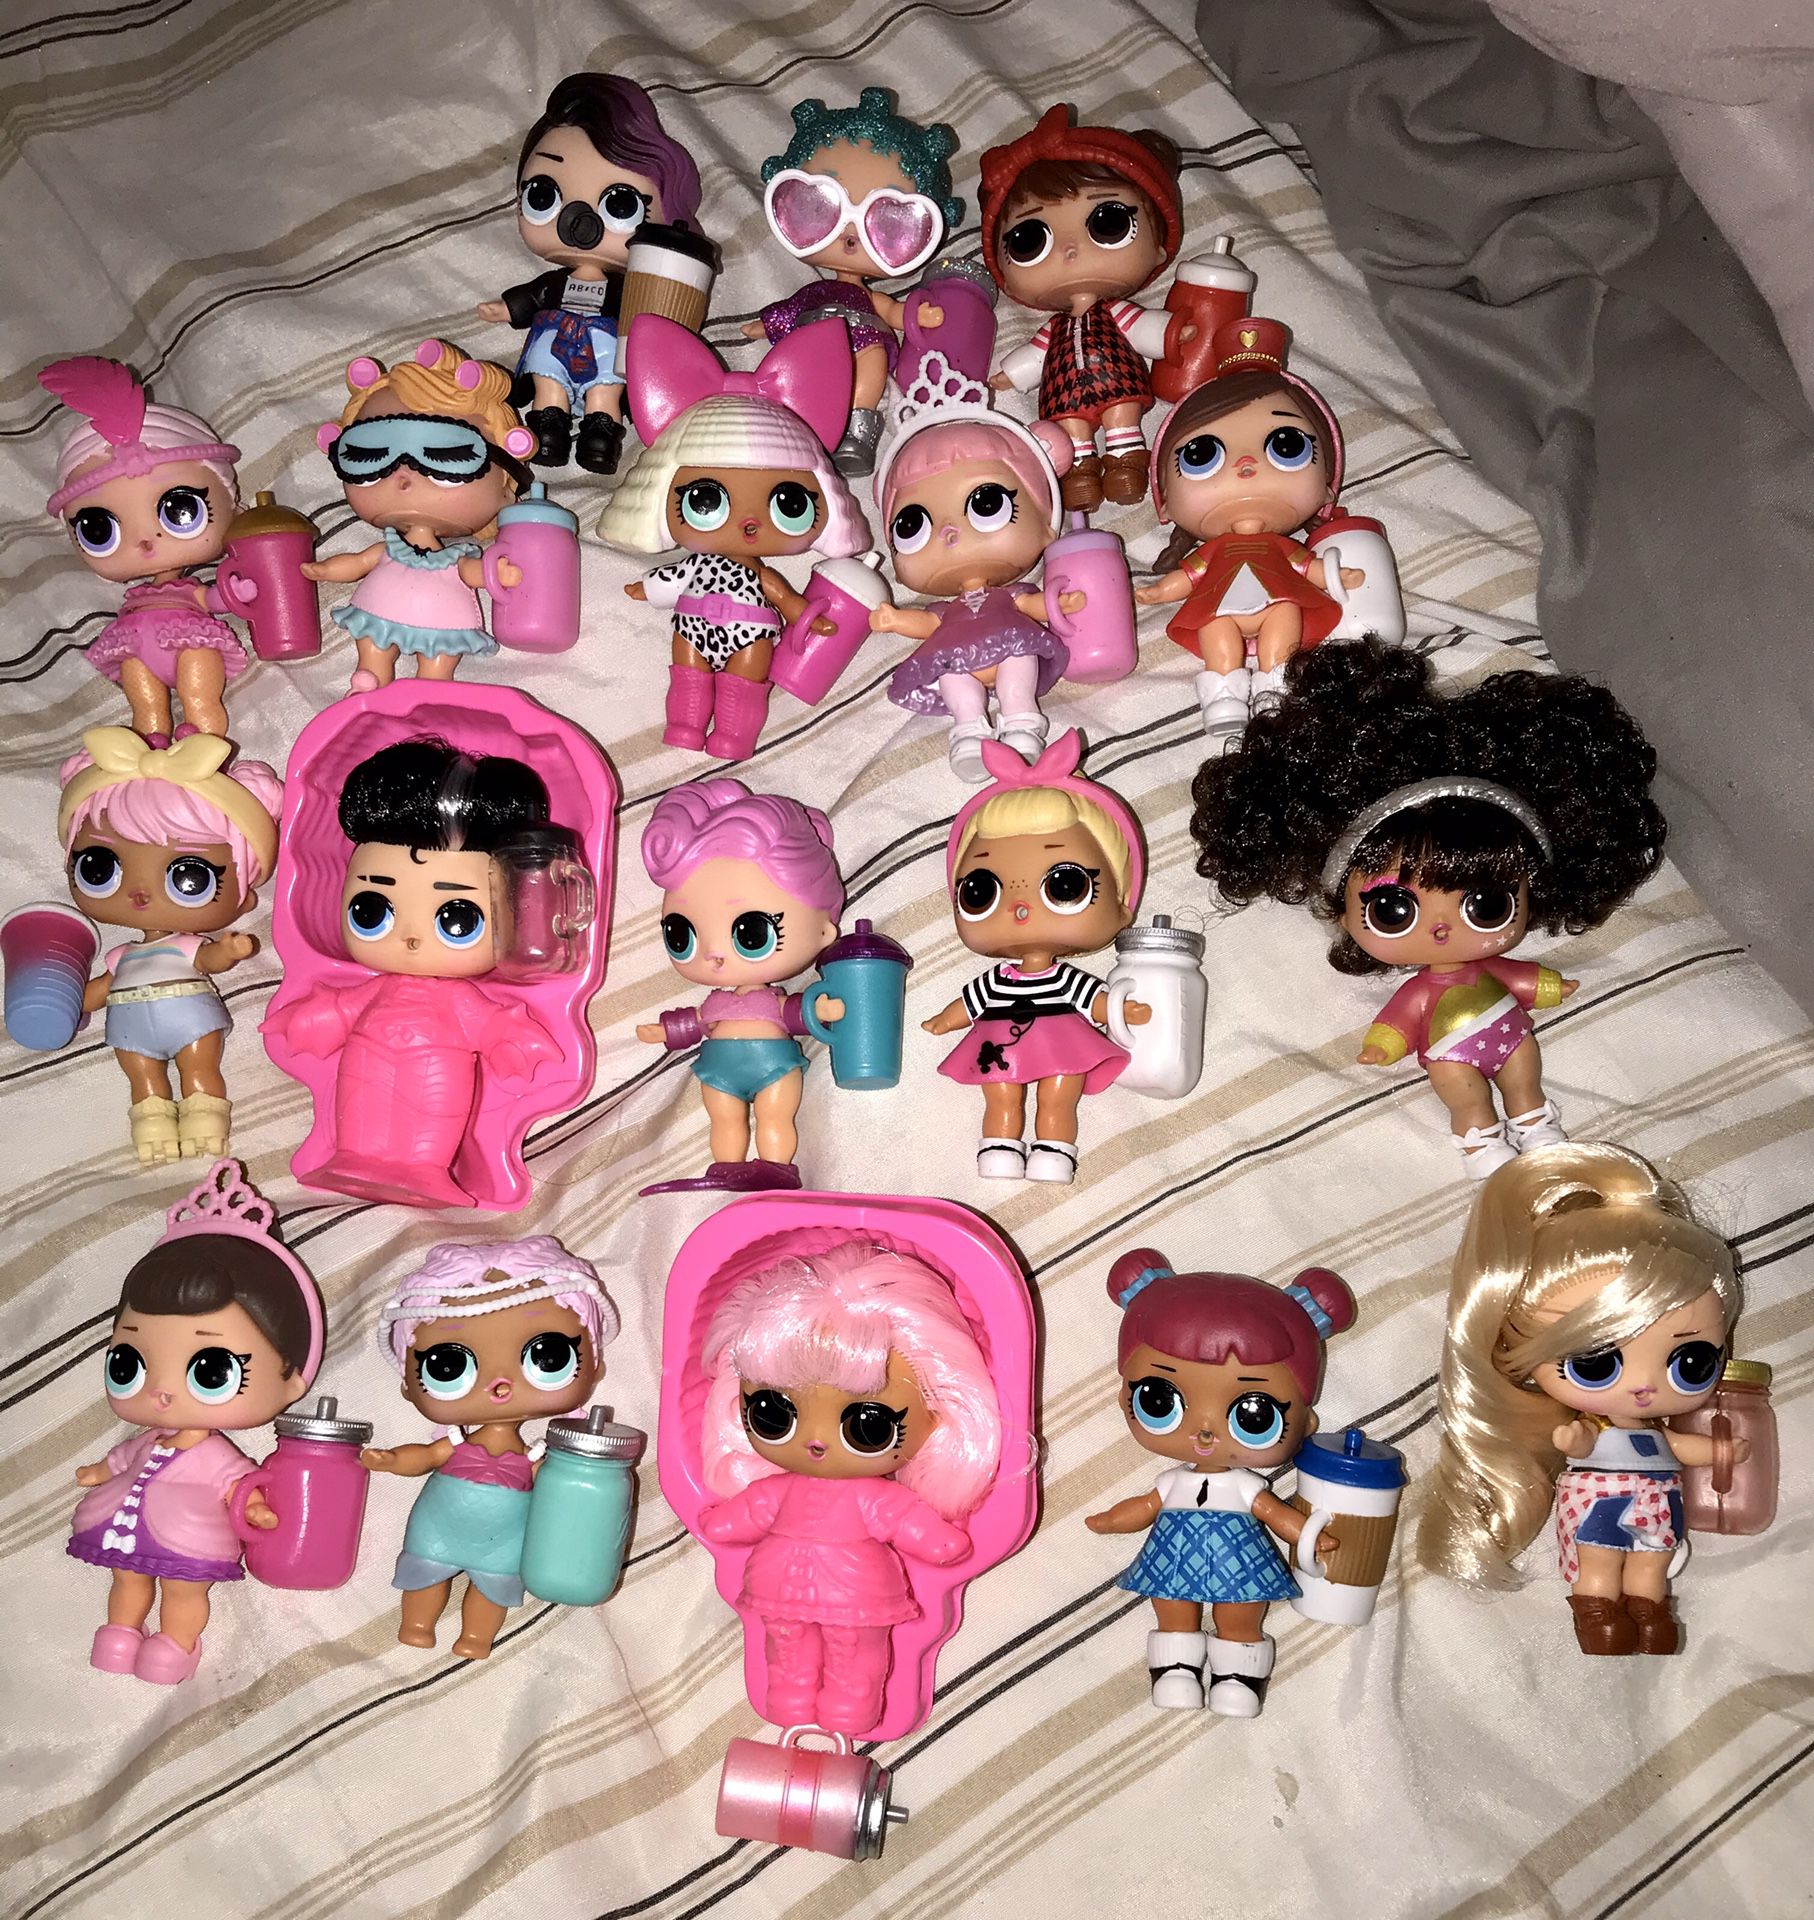 Lol surprise dolls - 18 random dolls